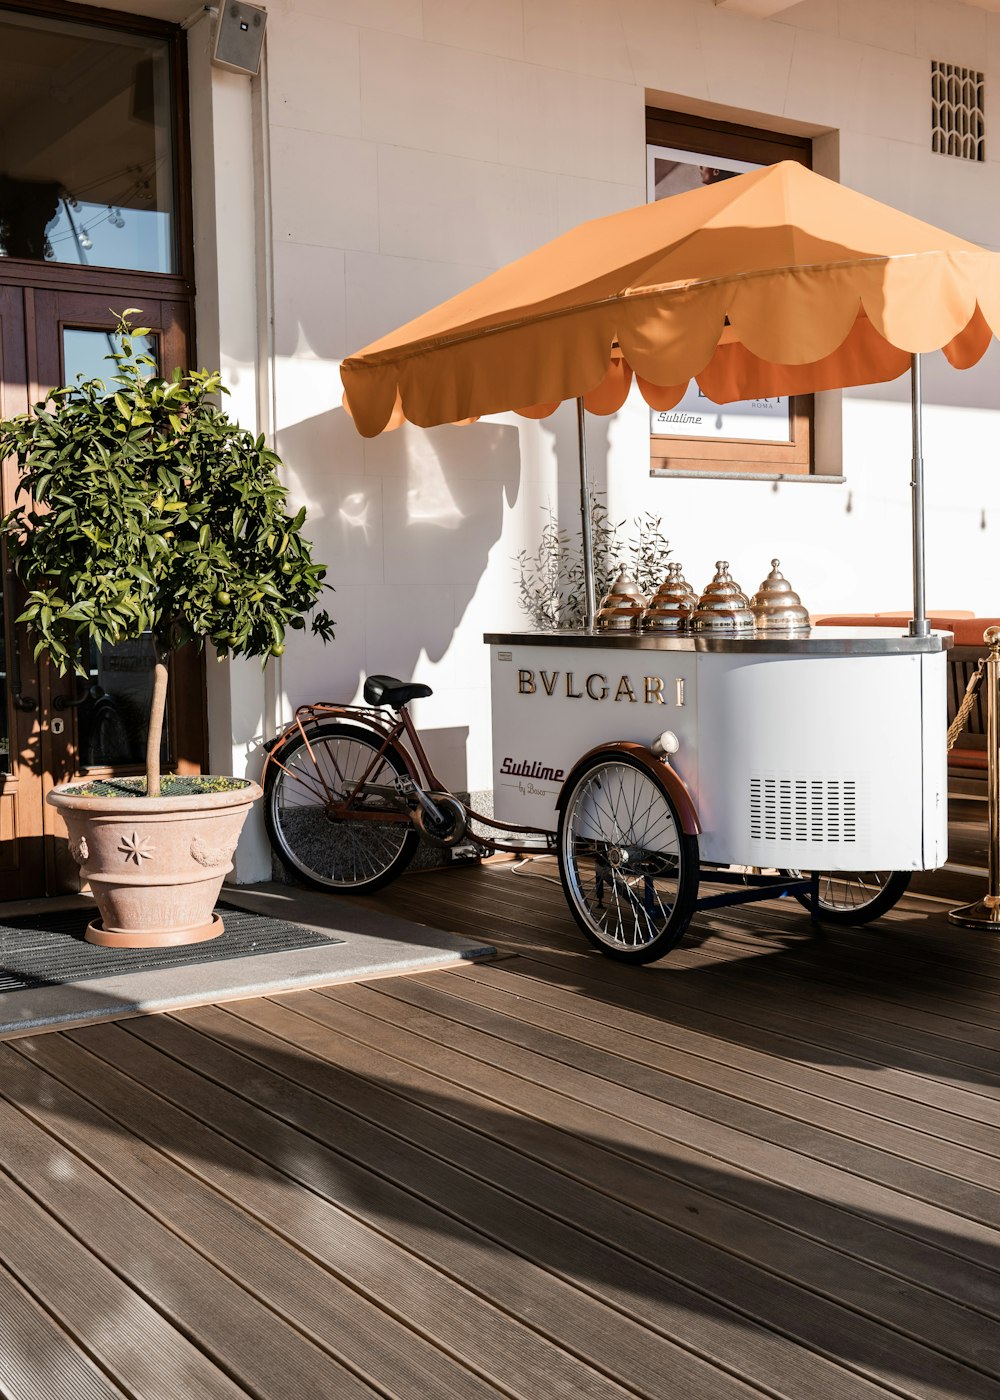 an ice cream cart sitting on a wooden deck